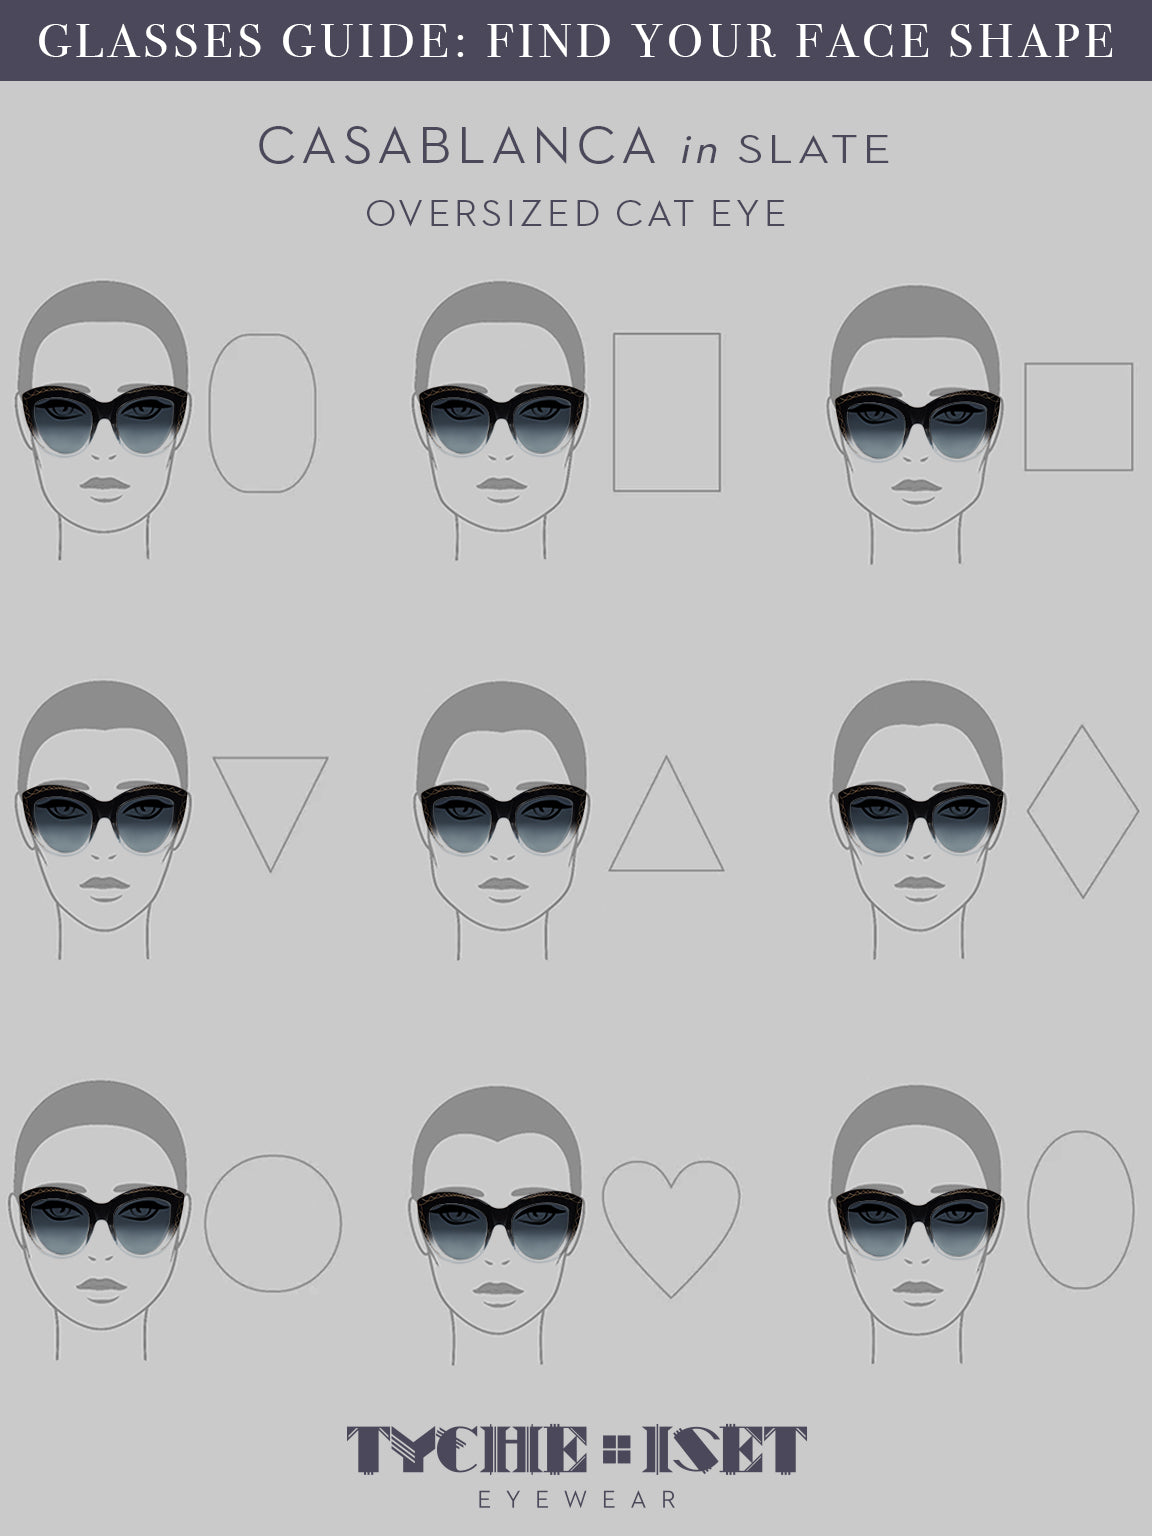 face shape guide, sunglasses face shape guide, black glasses, oversized sunglasses, woman-owned business, designer eyewear, luxury sunglasses, cat eye glasses, celebrity style